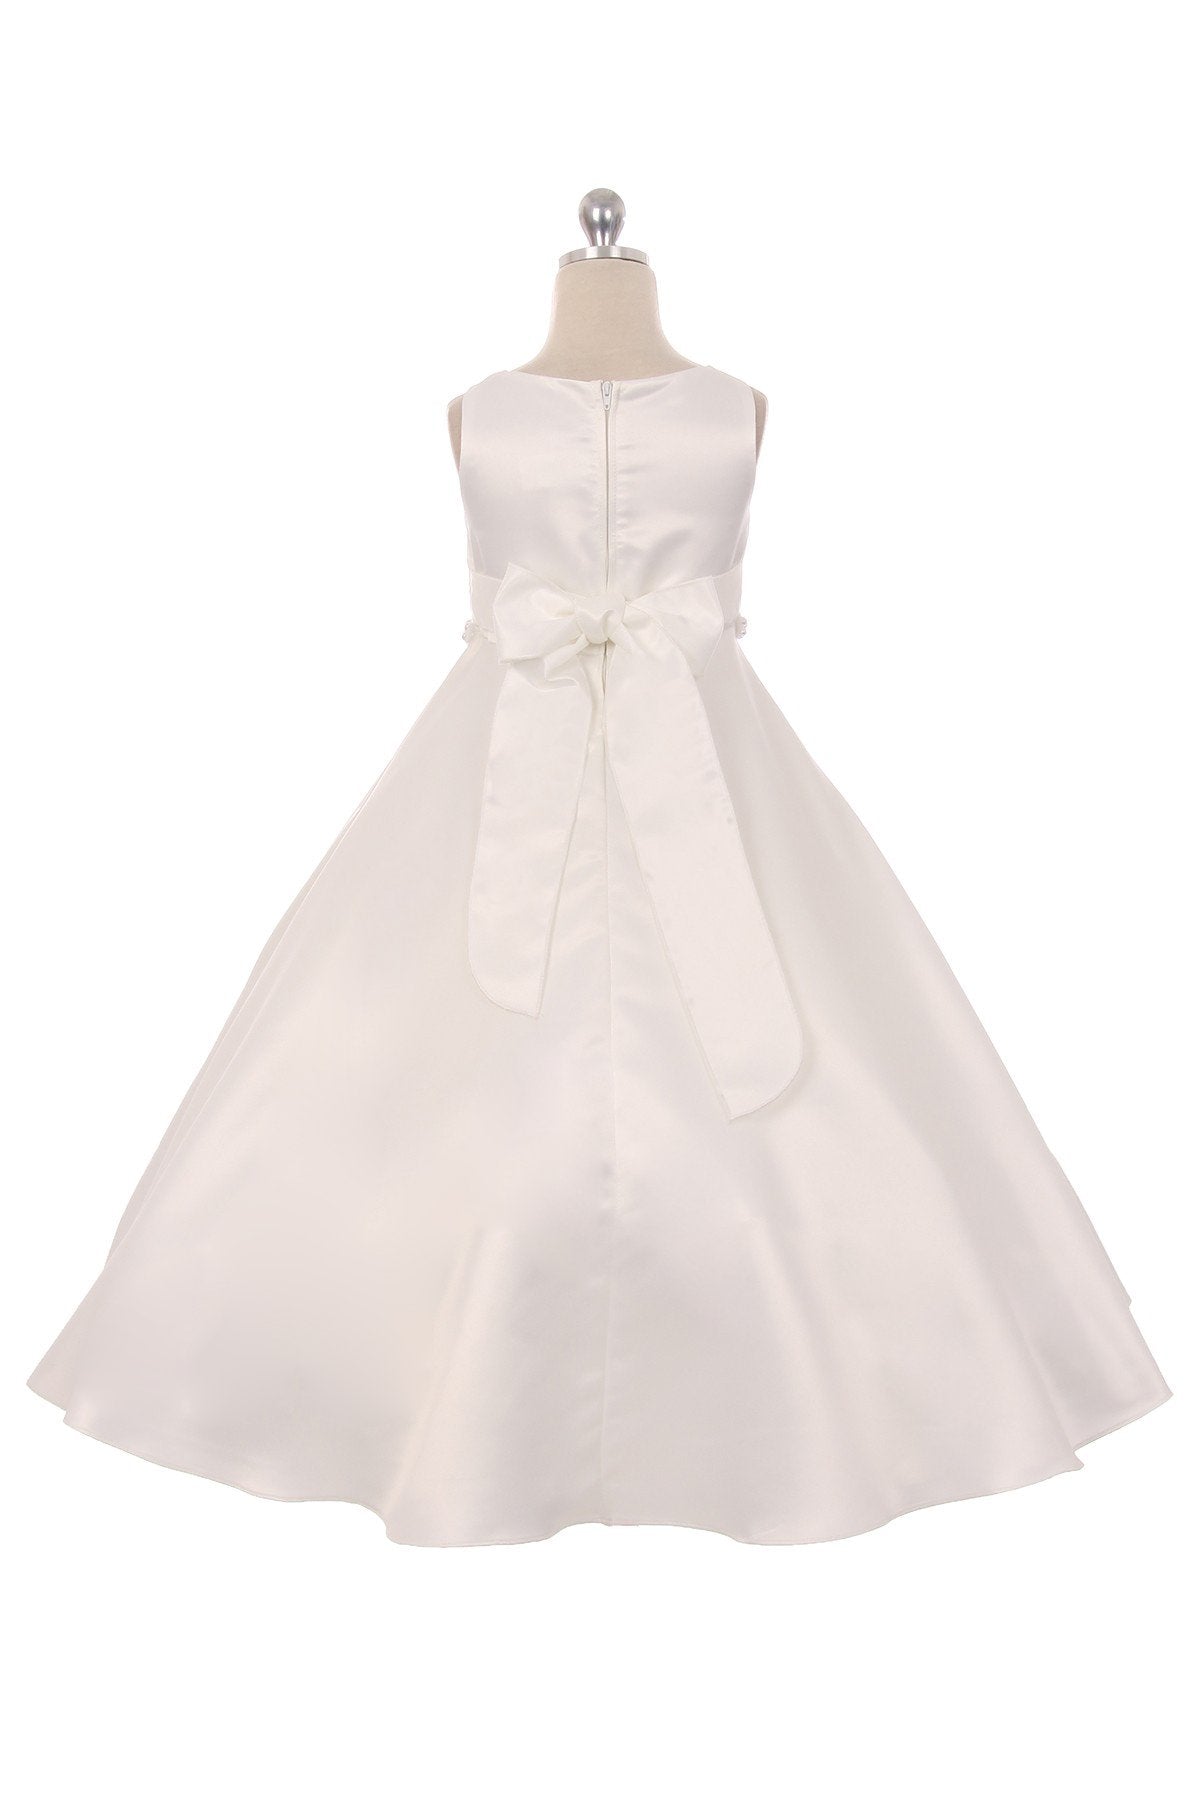 Dress - Long Satin Pearl Trim Communion Dress